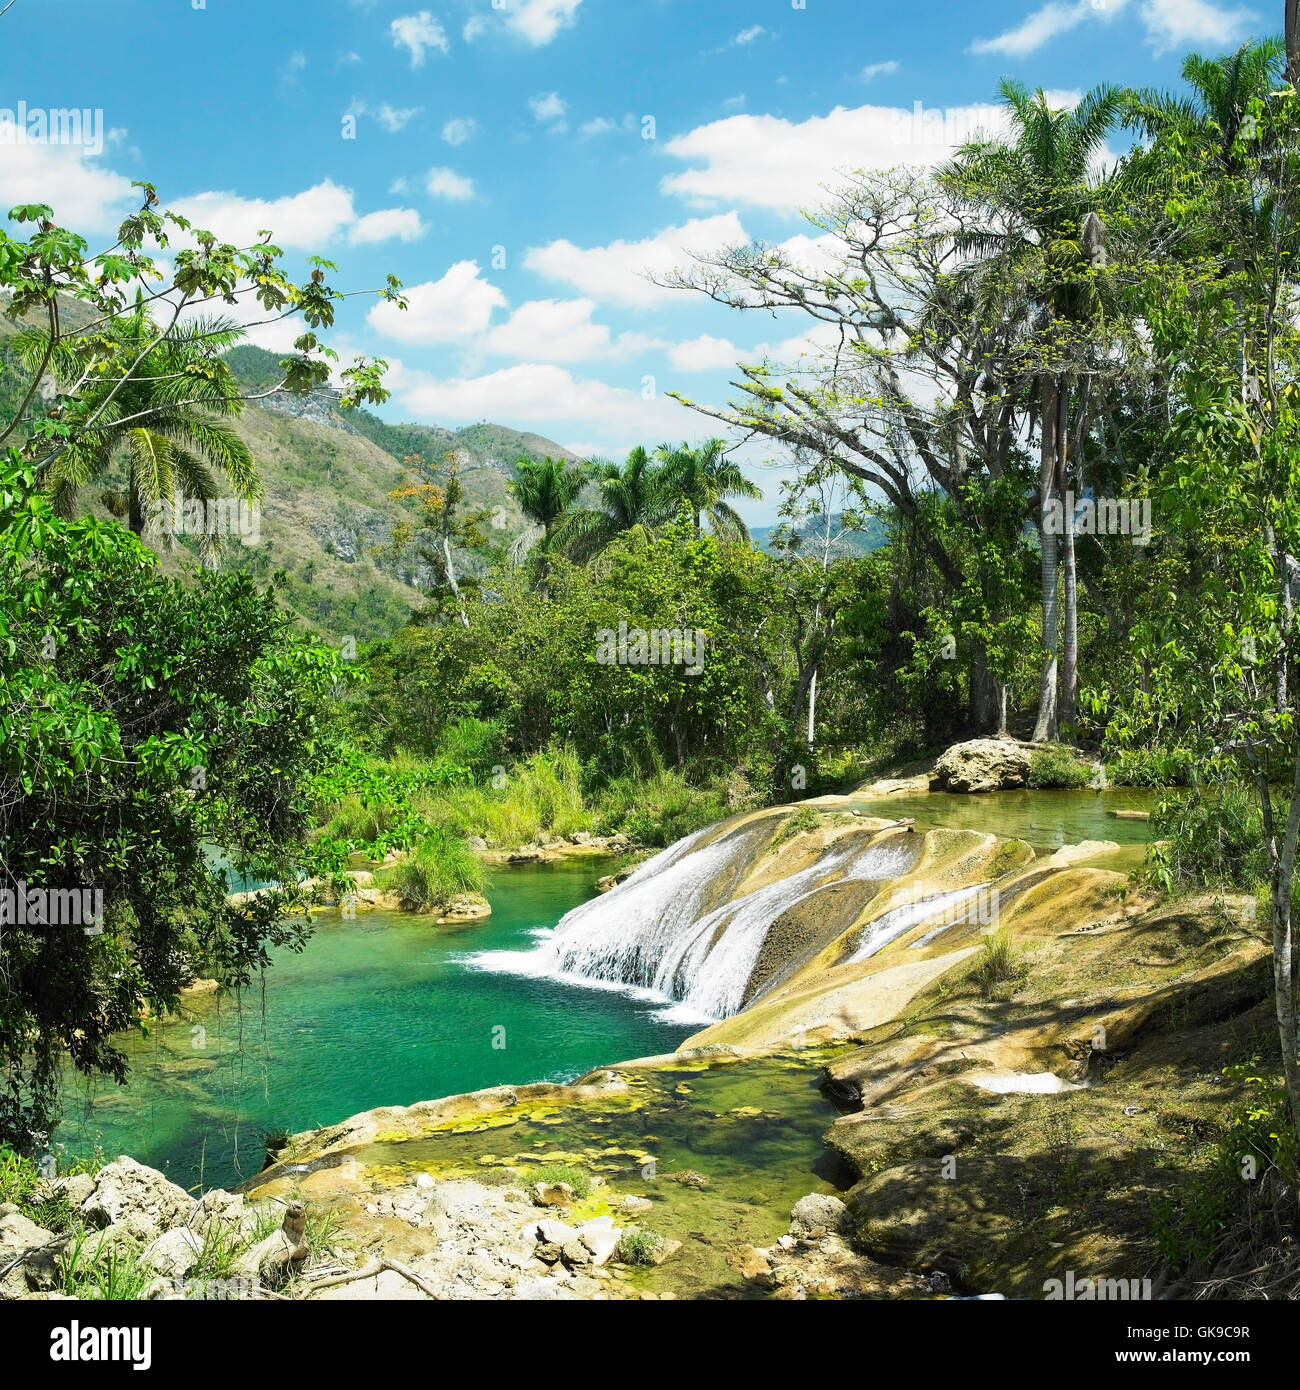 cuba nature travel Stock Photo - Alamy